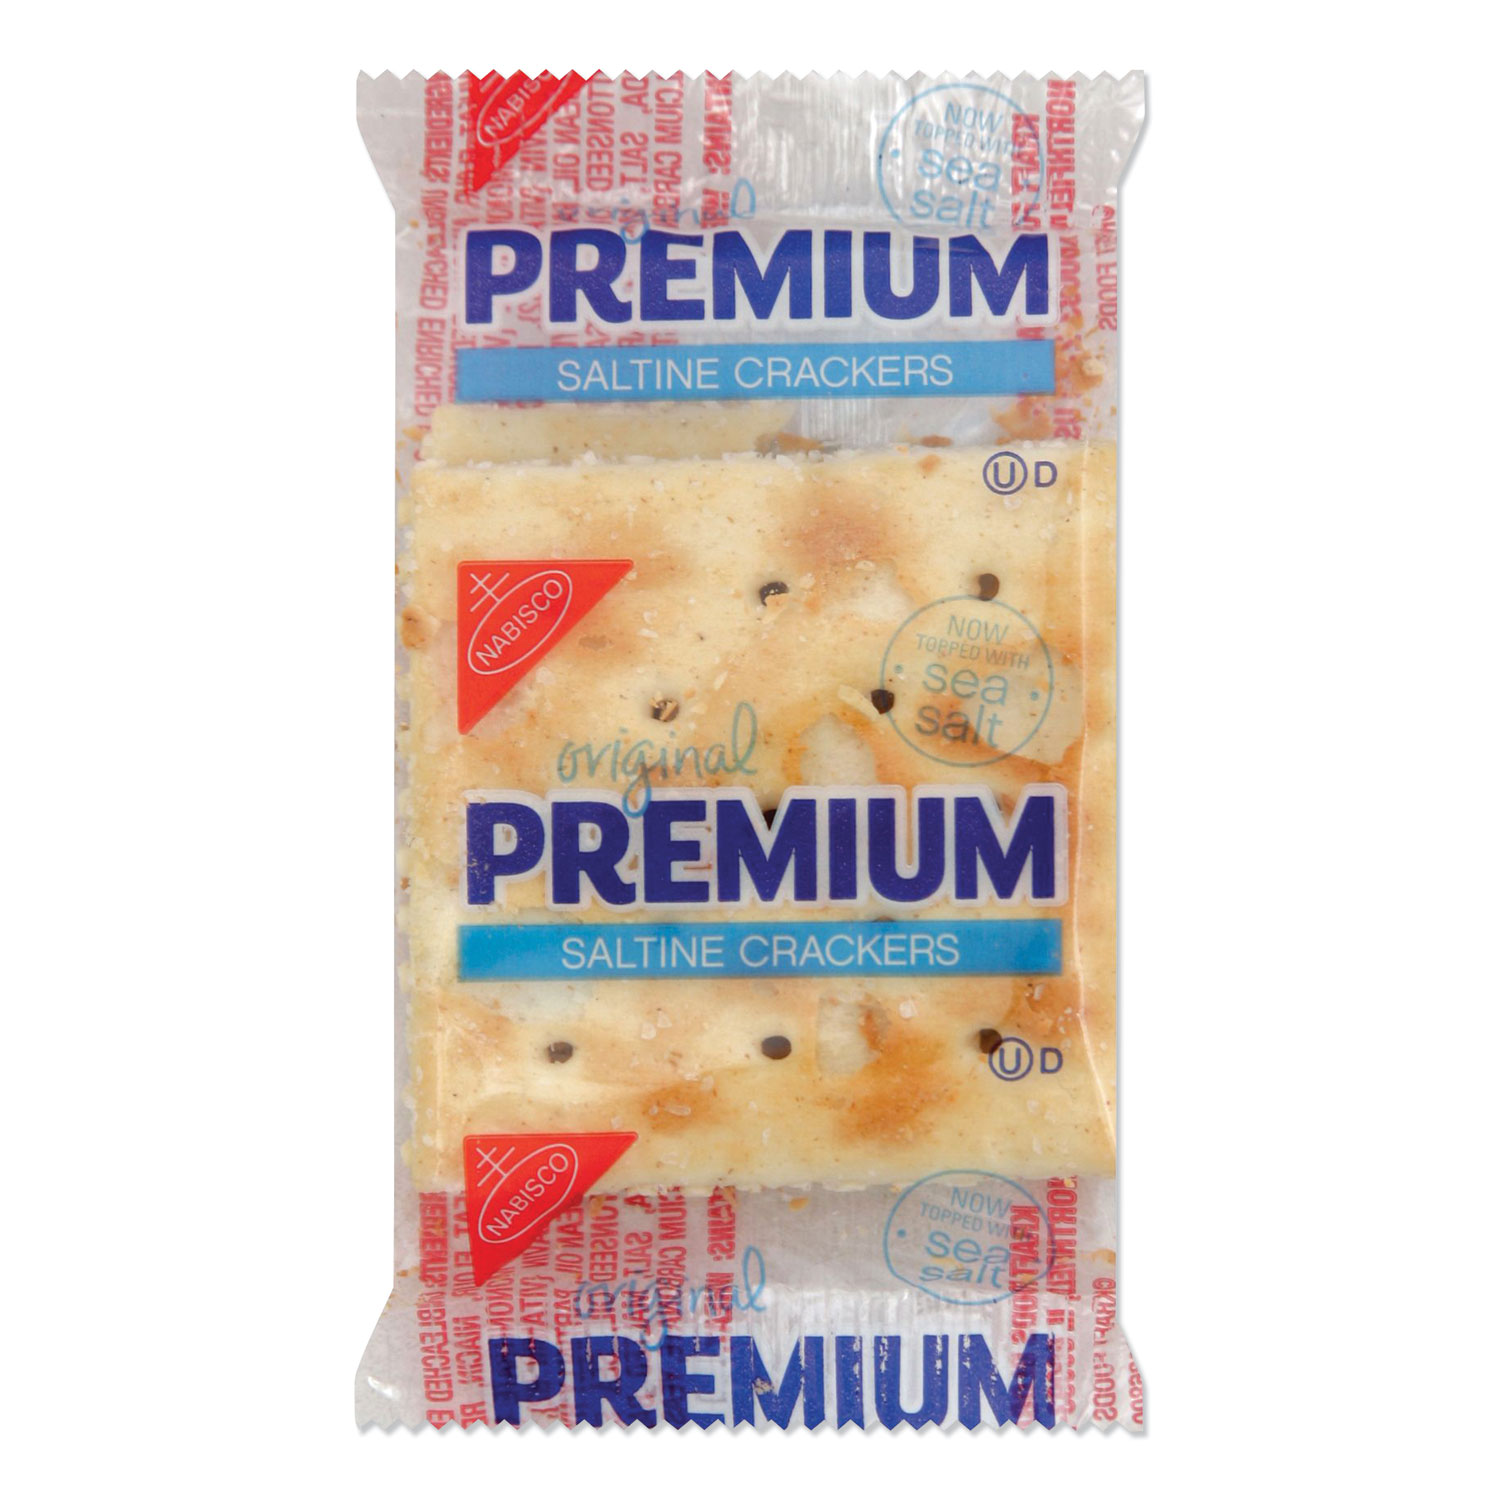  Nabisco NFG016664 Premium Saltine Crackers, 0.05 oz Packet, 2/Packet, 500 Packets/Carton (NFG898031) 